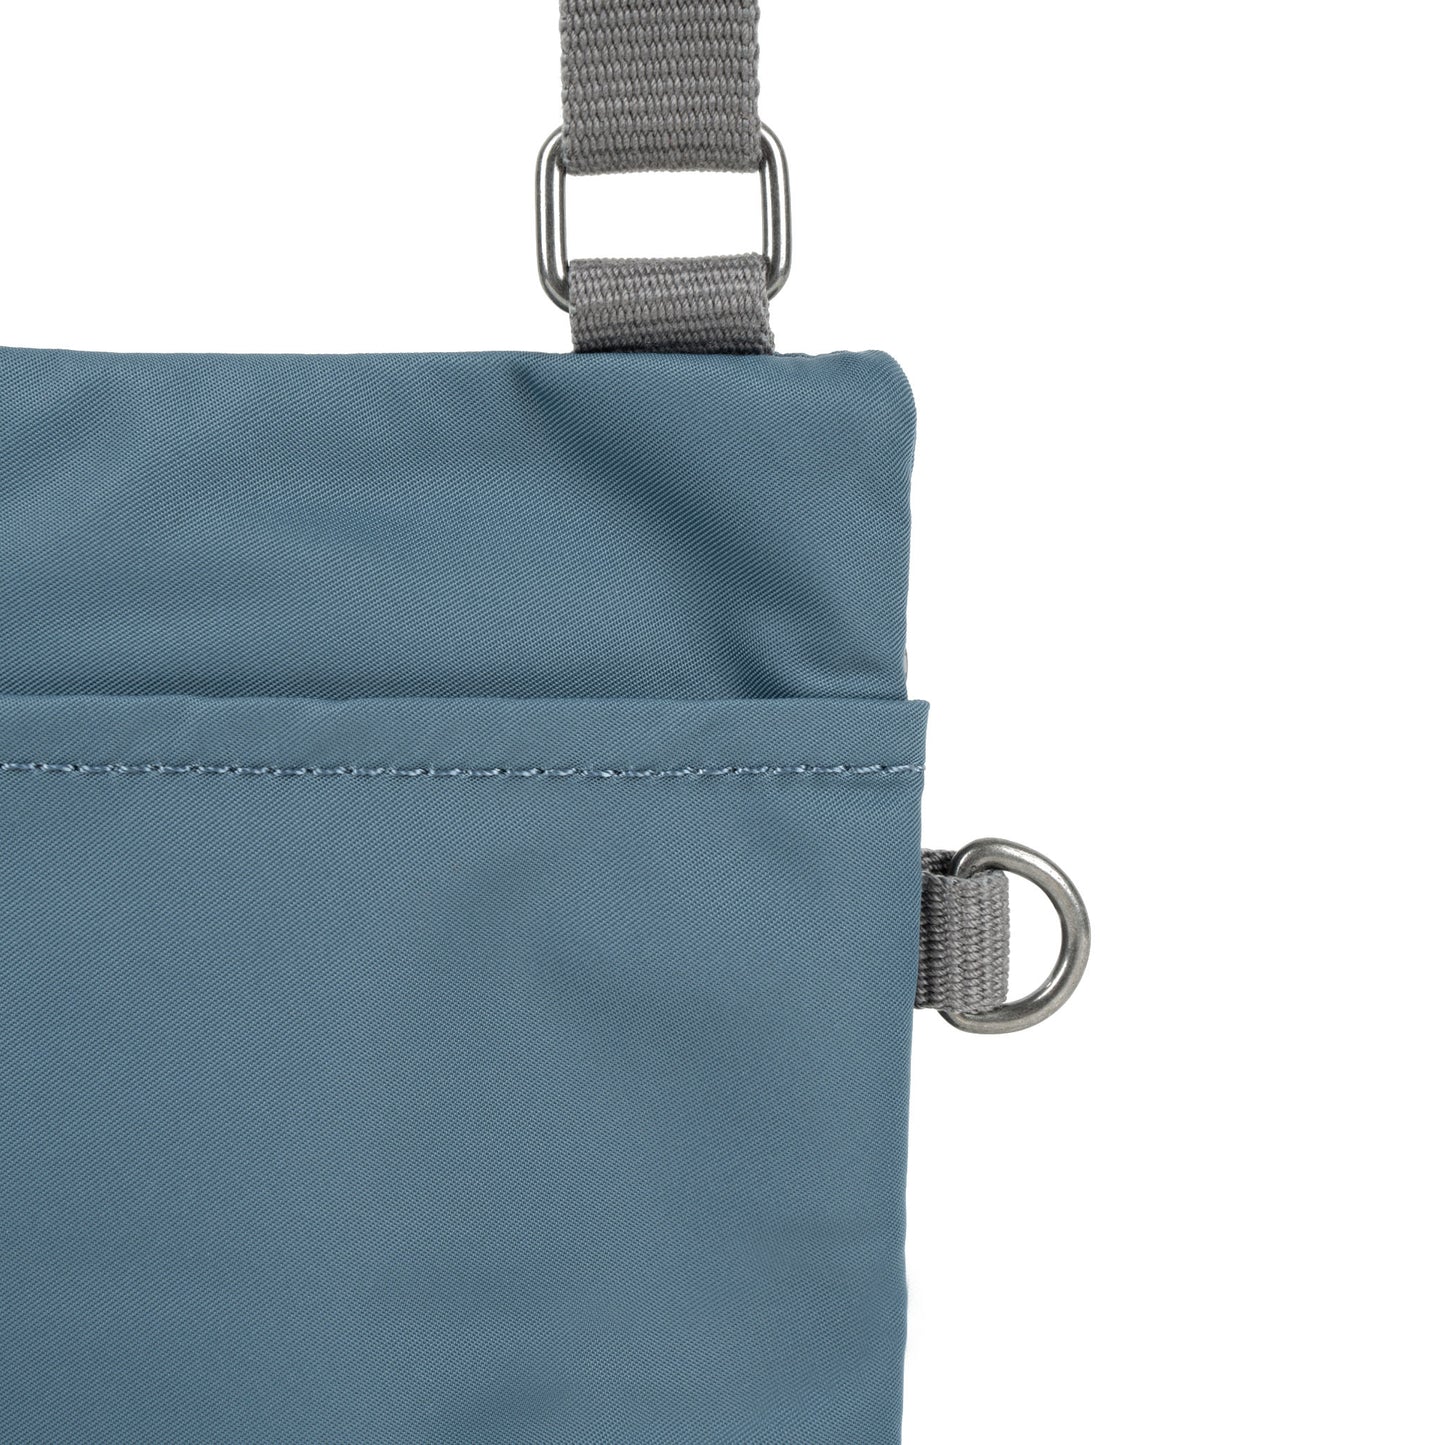 Roka London Chelsea Crossbody Phone Bag, Airforce Blue(Recycled Nylon)